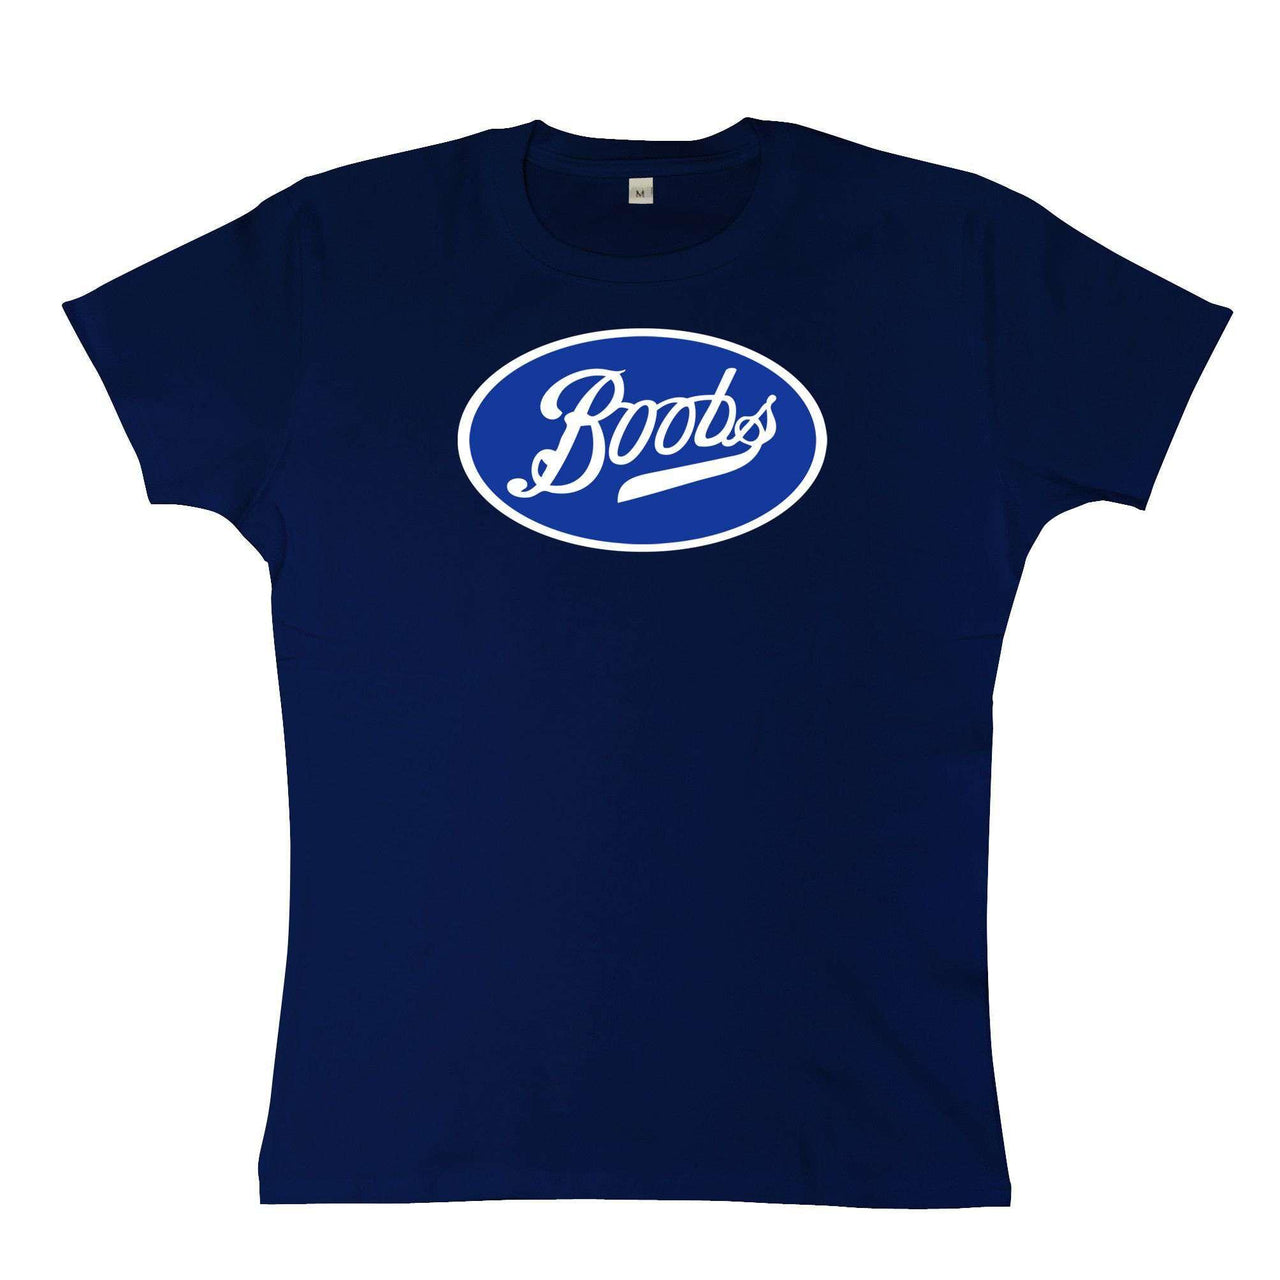 Boobs Womens Fitted T-Shirt 8Ball